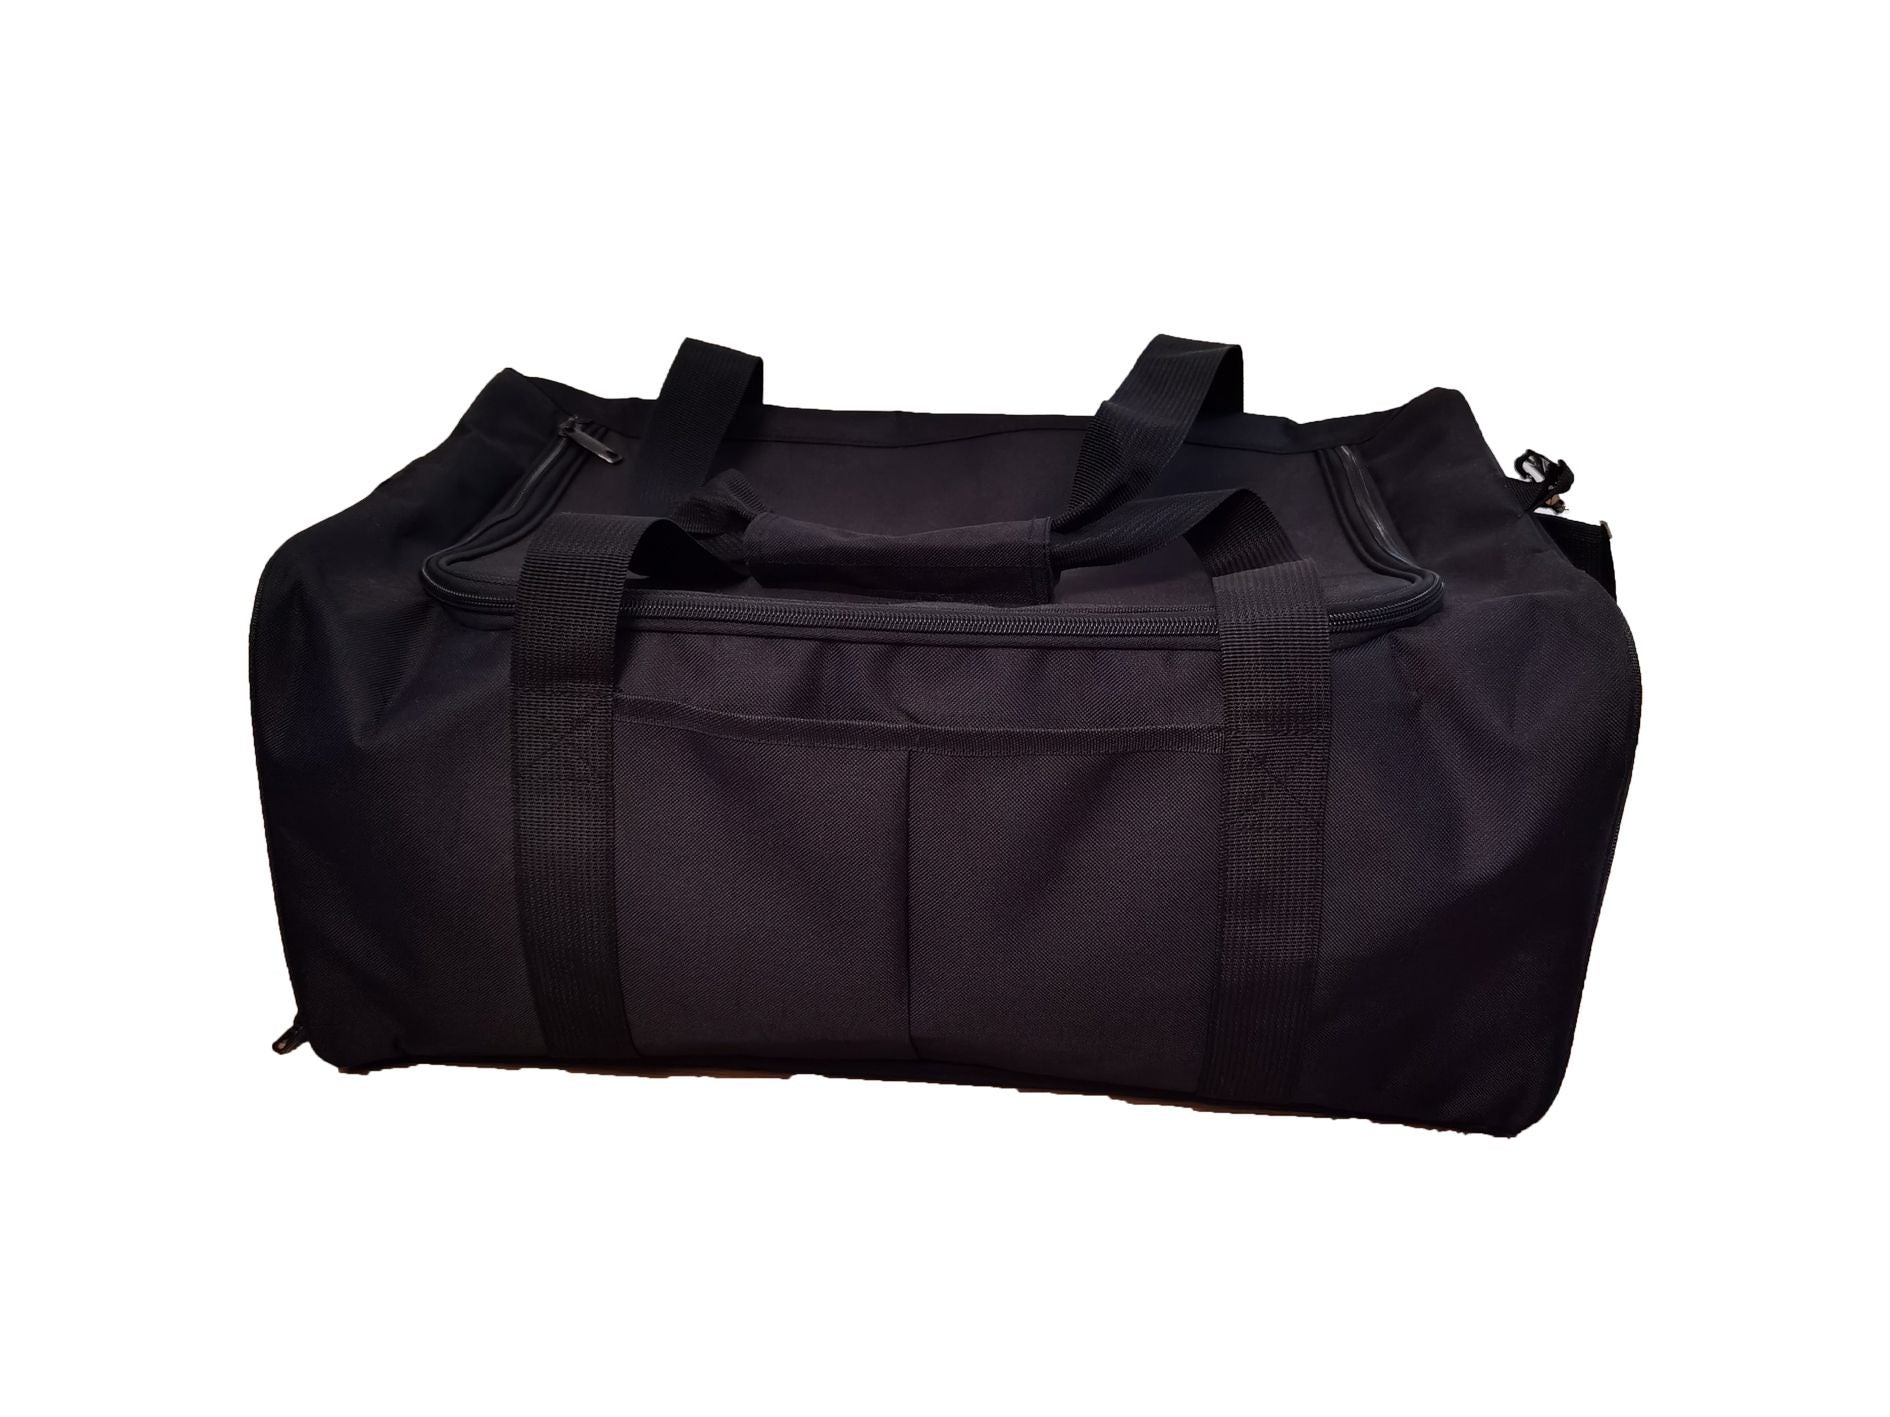 Buzz Physique Duffle Bag - Premium  from Buzz Physique - Just $25.95! Shop now at Buzz Physique